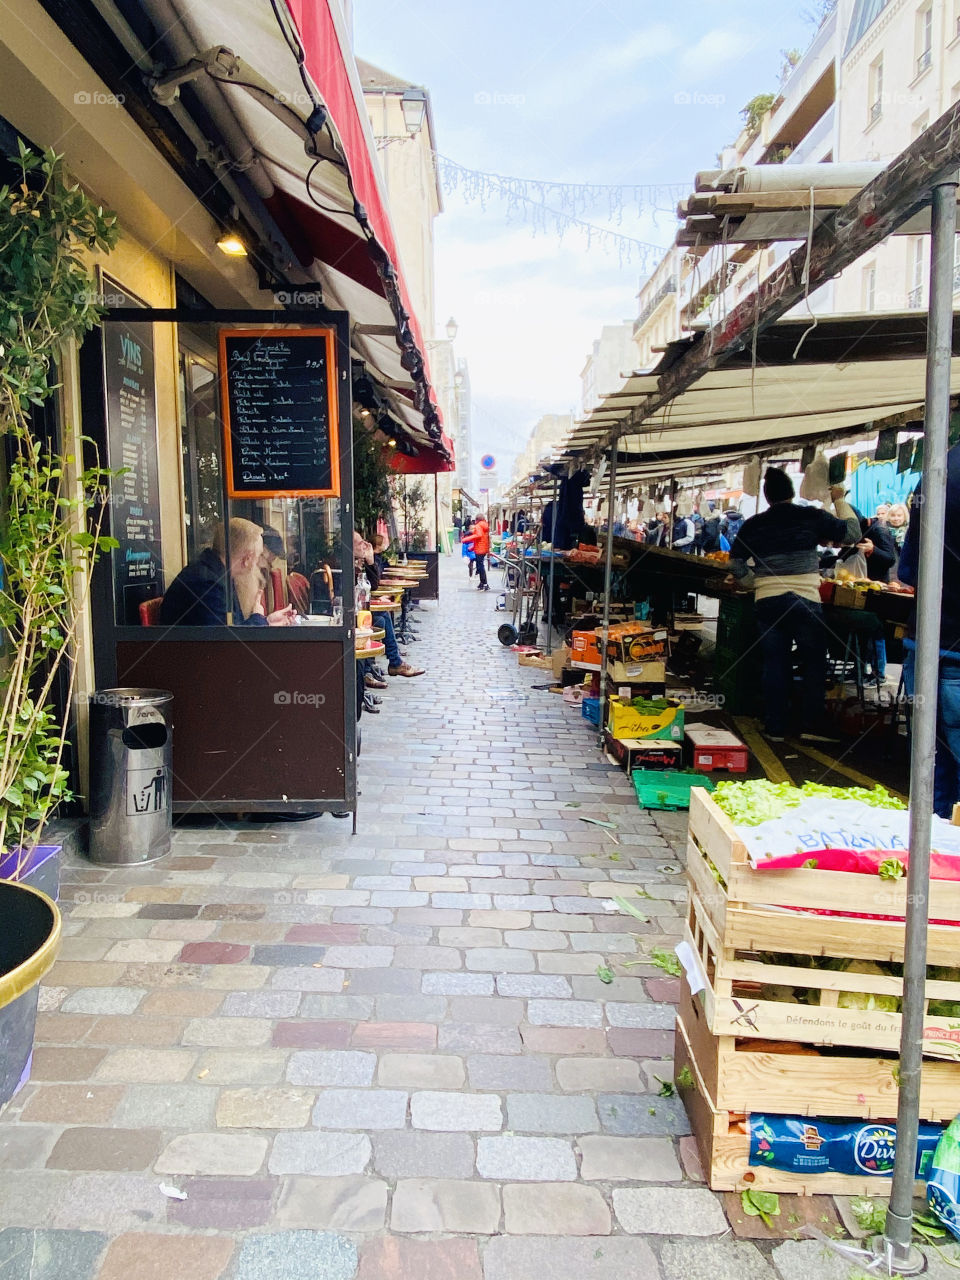 Local market in Paris France on Rue d Aligre